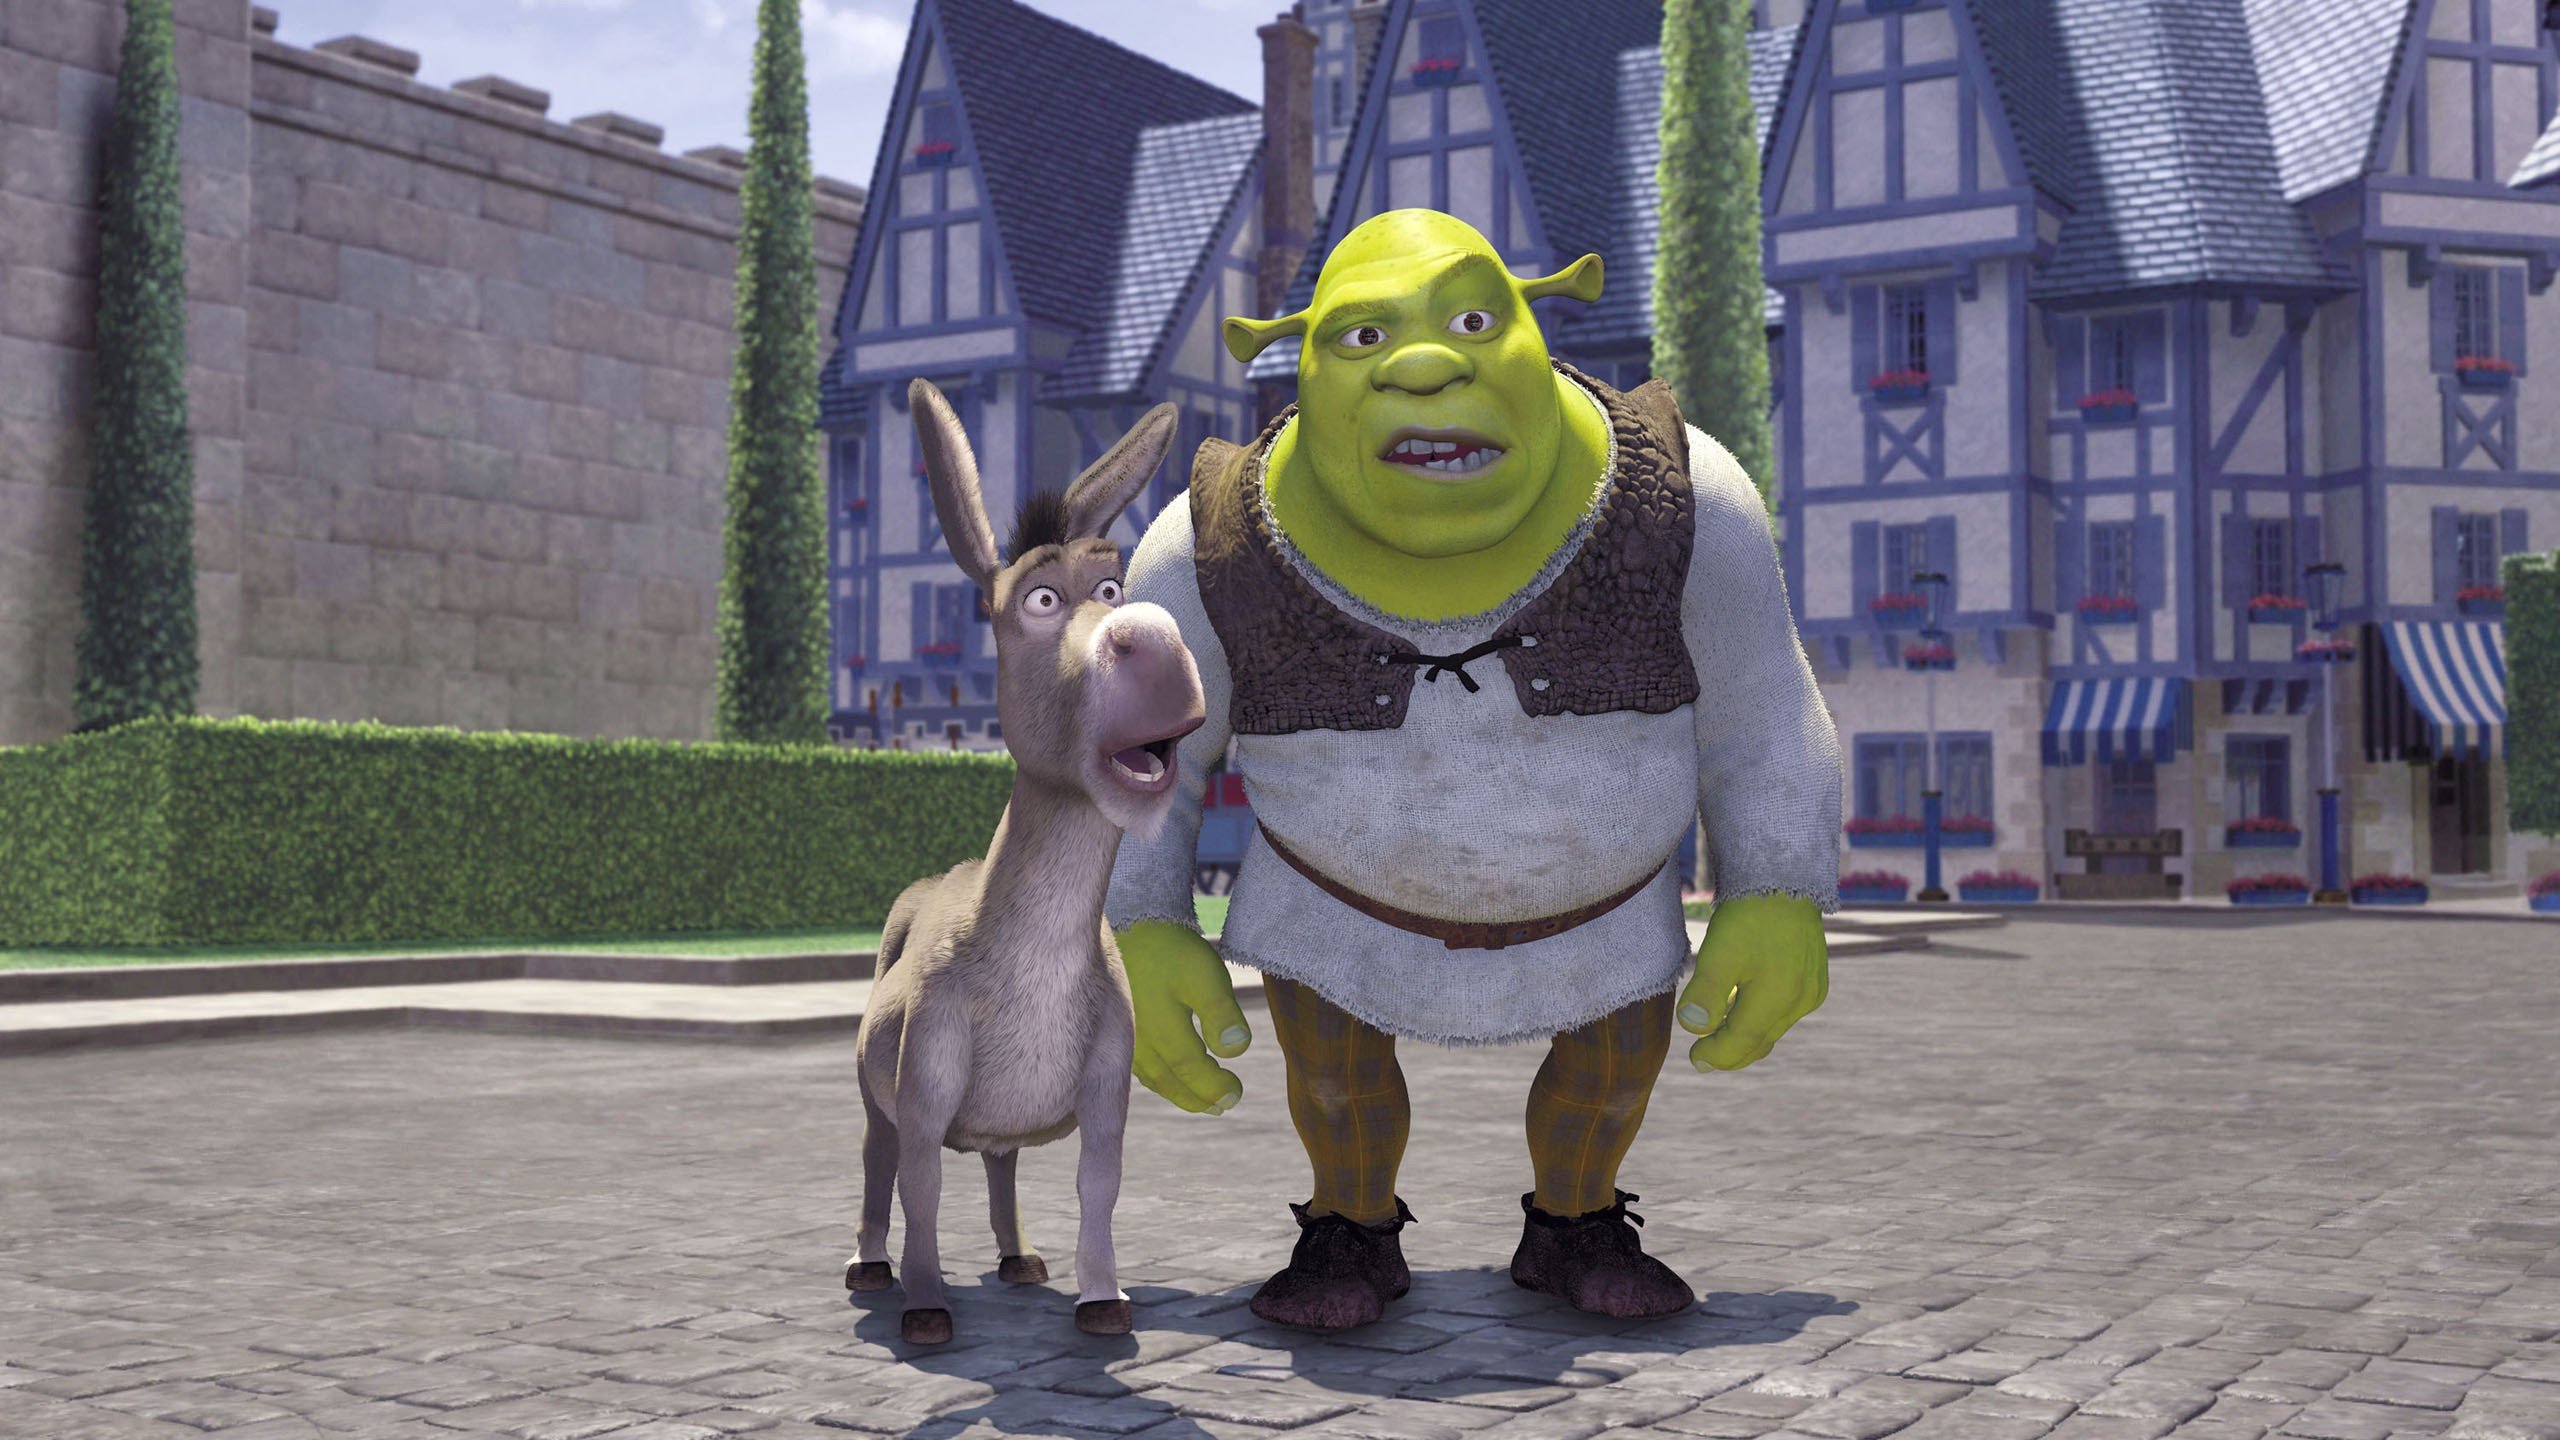 Fondos de pantalla Shrek y burro